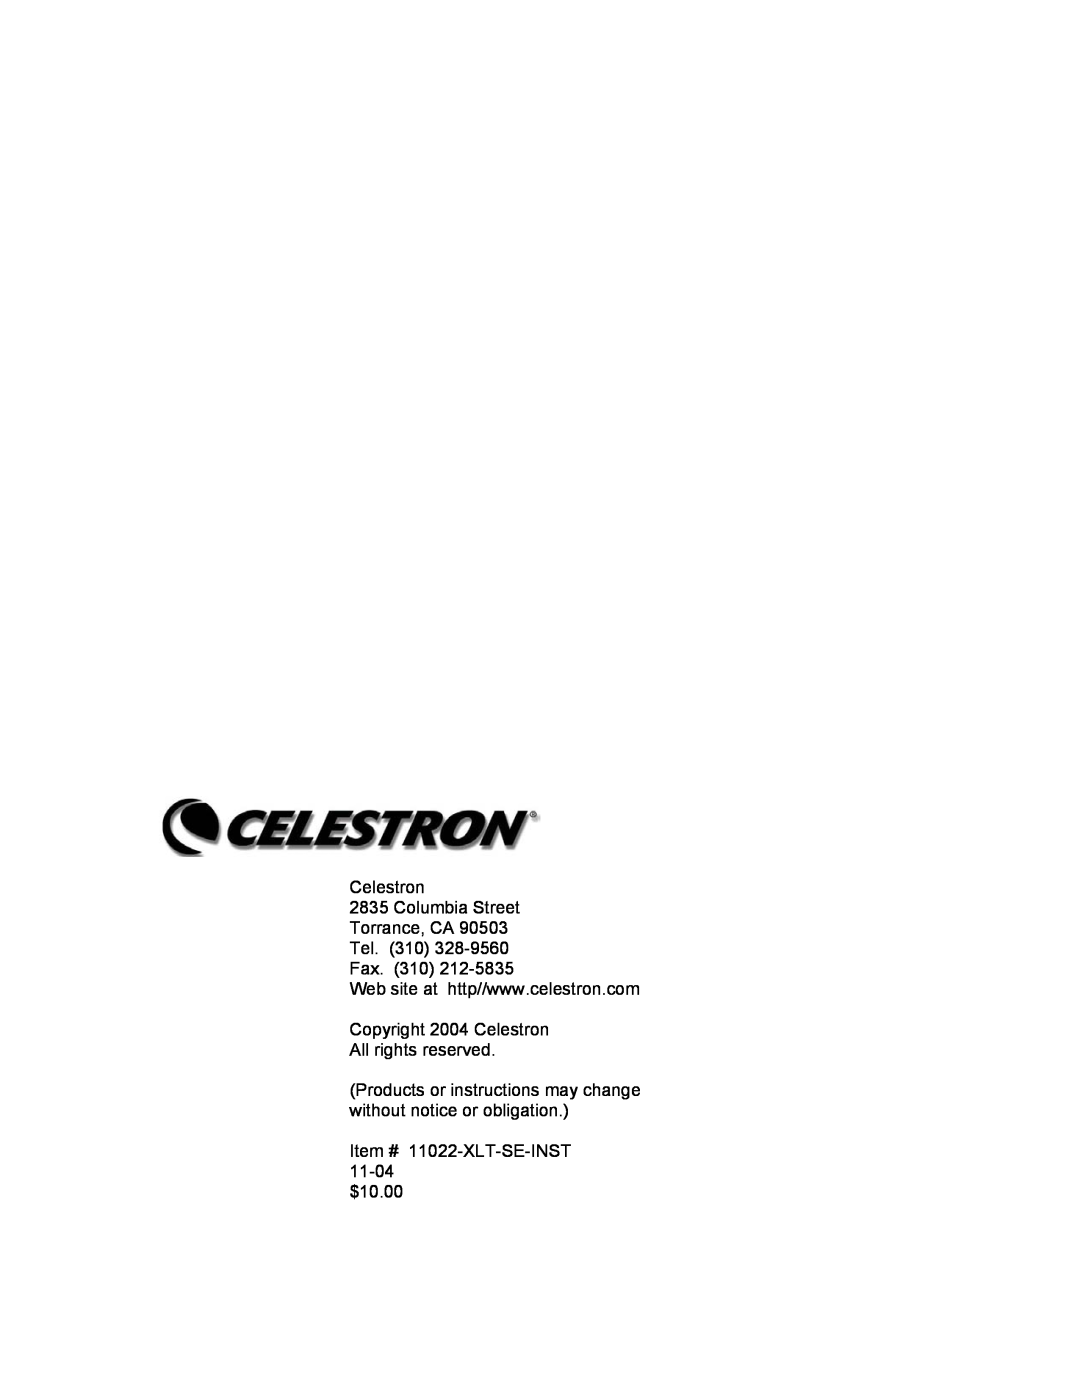 Celestron NexStar 8i Celestron 2835 Columbia Street Torrance, CA Tel. 310 Fax. 310, Item # 11022-XLT-SE-INST 11-04 $10.00 